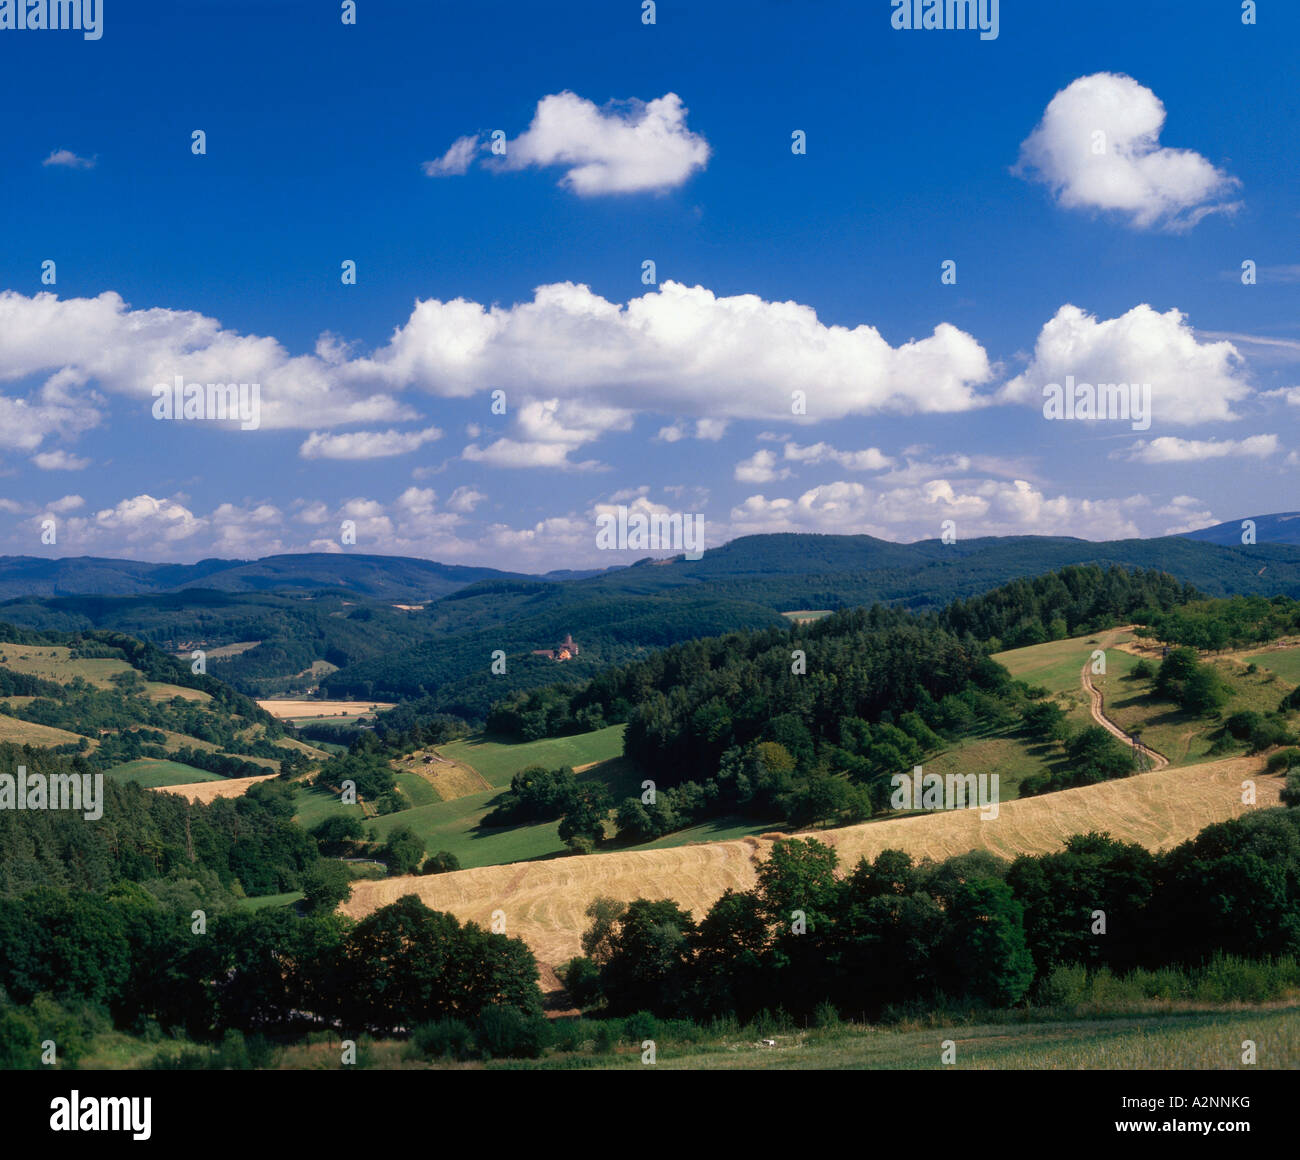 Clouds in sky above rural landscape, Ludwigstein Castle, Witzenhausen, Werra Valley, Hesse, Germany Stock Photo